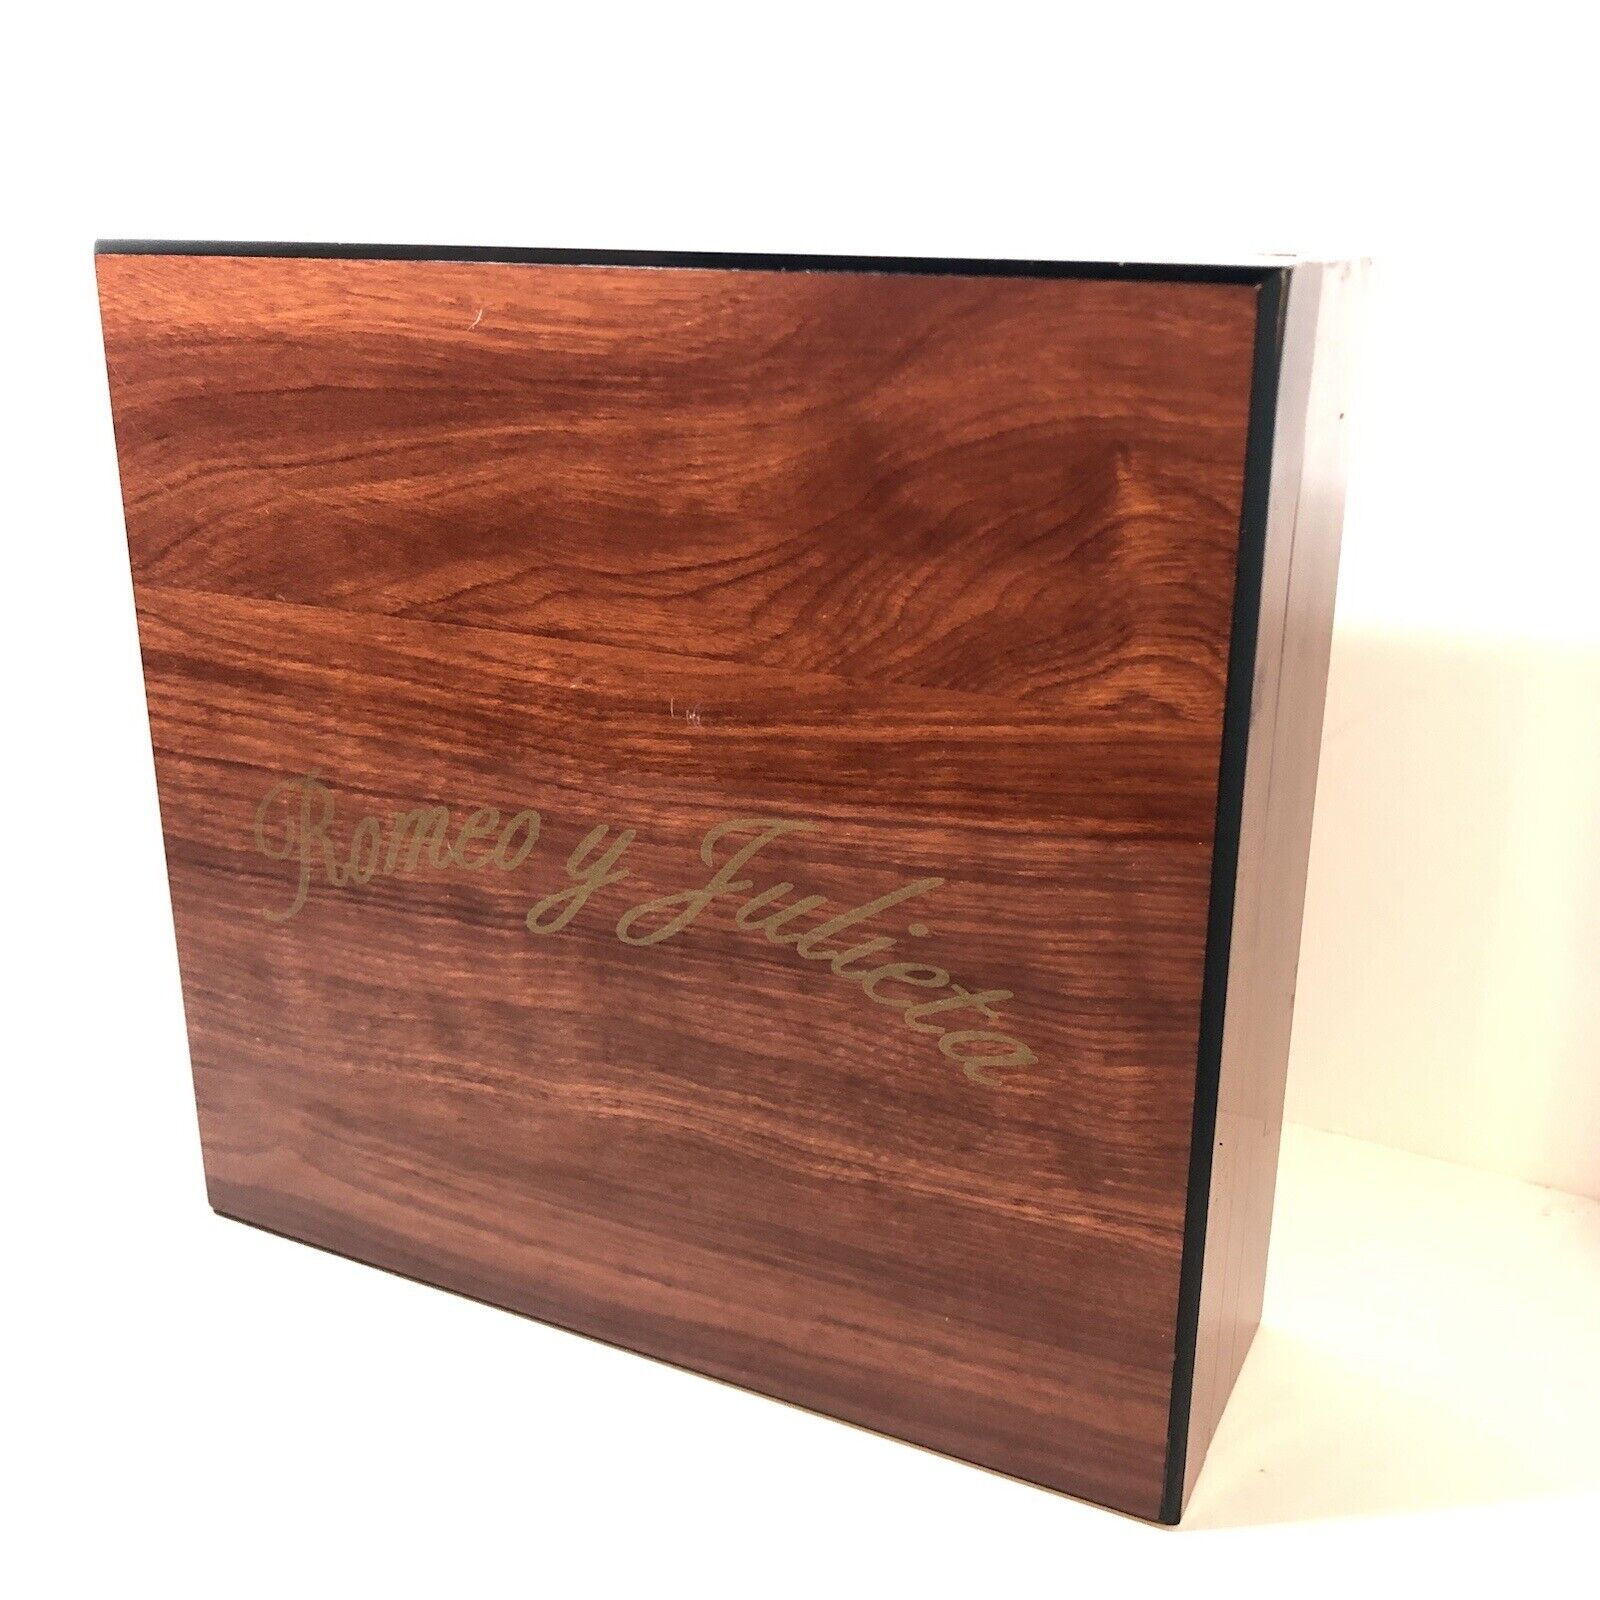 Romeo y Julieta Cigar Wood Box Aniversano Toro. Rare. Missing 2 Sm. Gold Screws